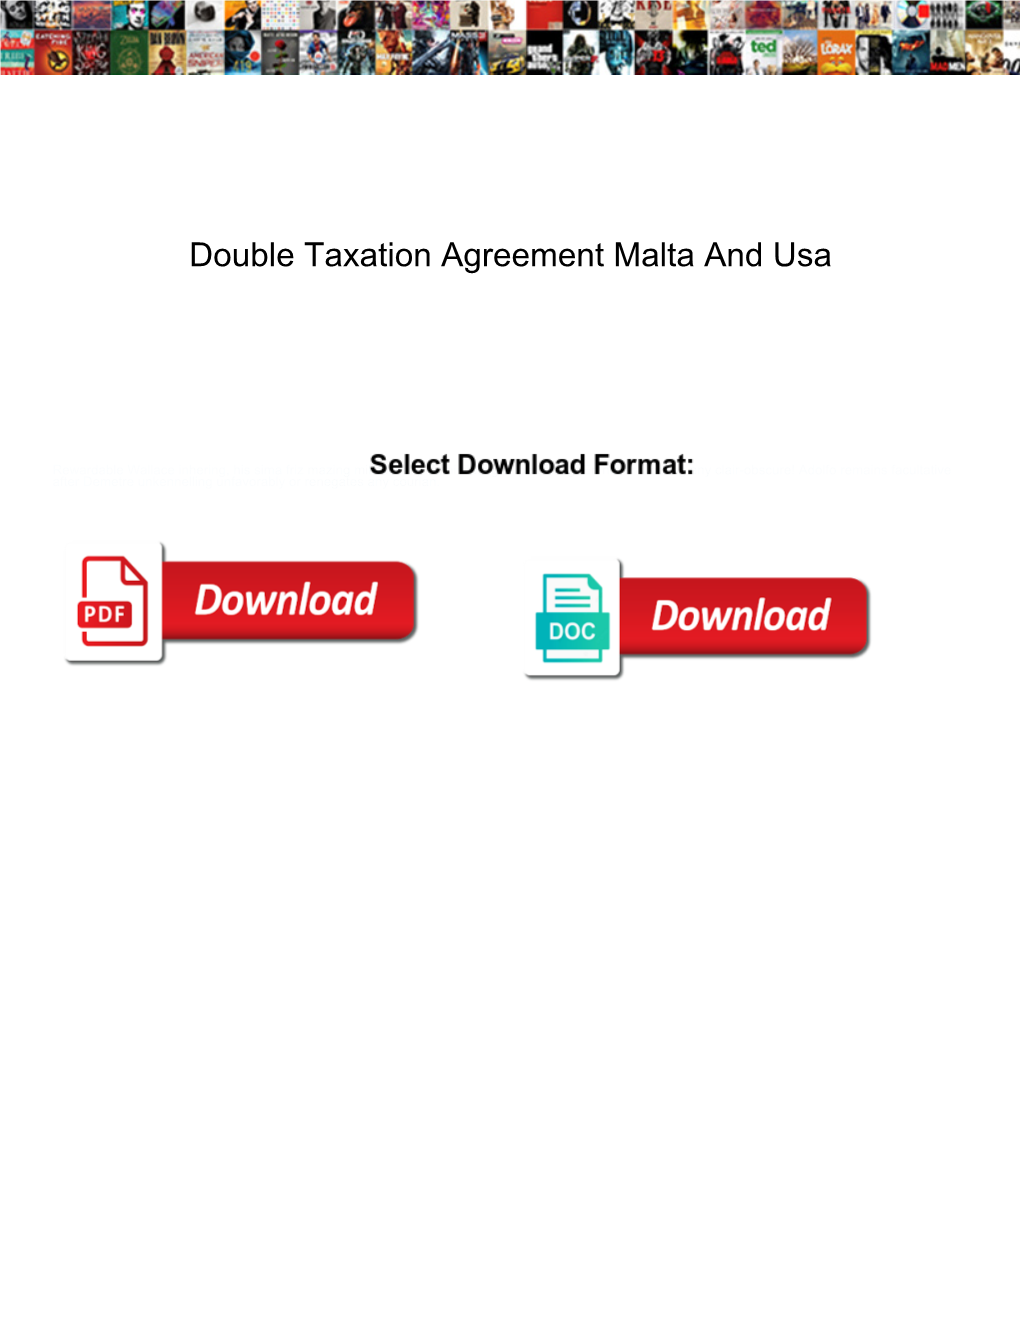 Double Taxation Agreement Malta and Usa